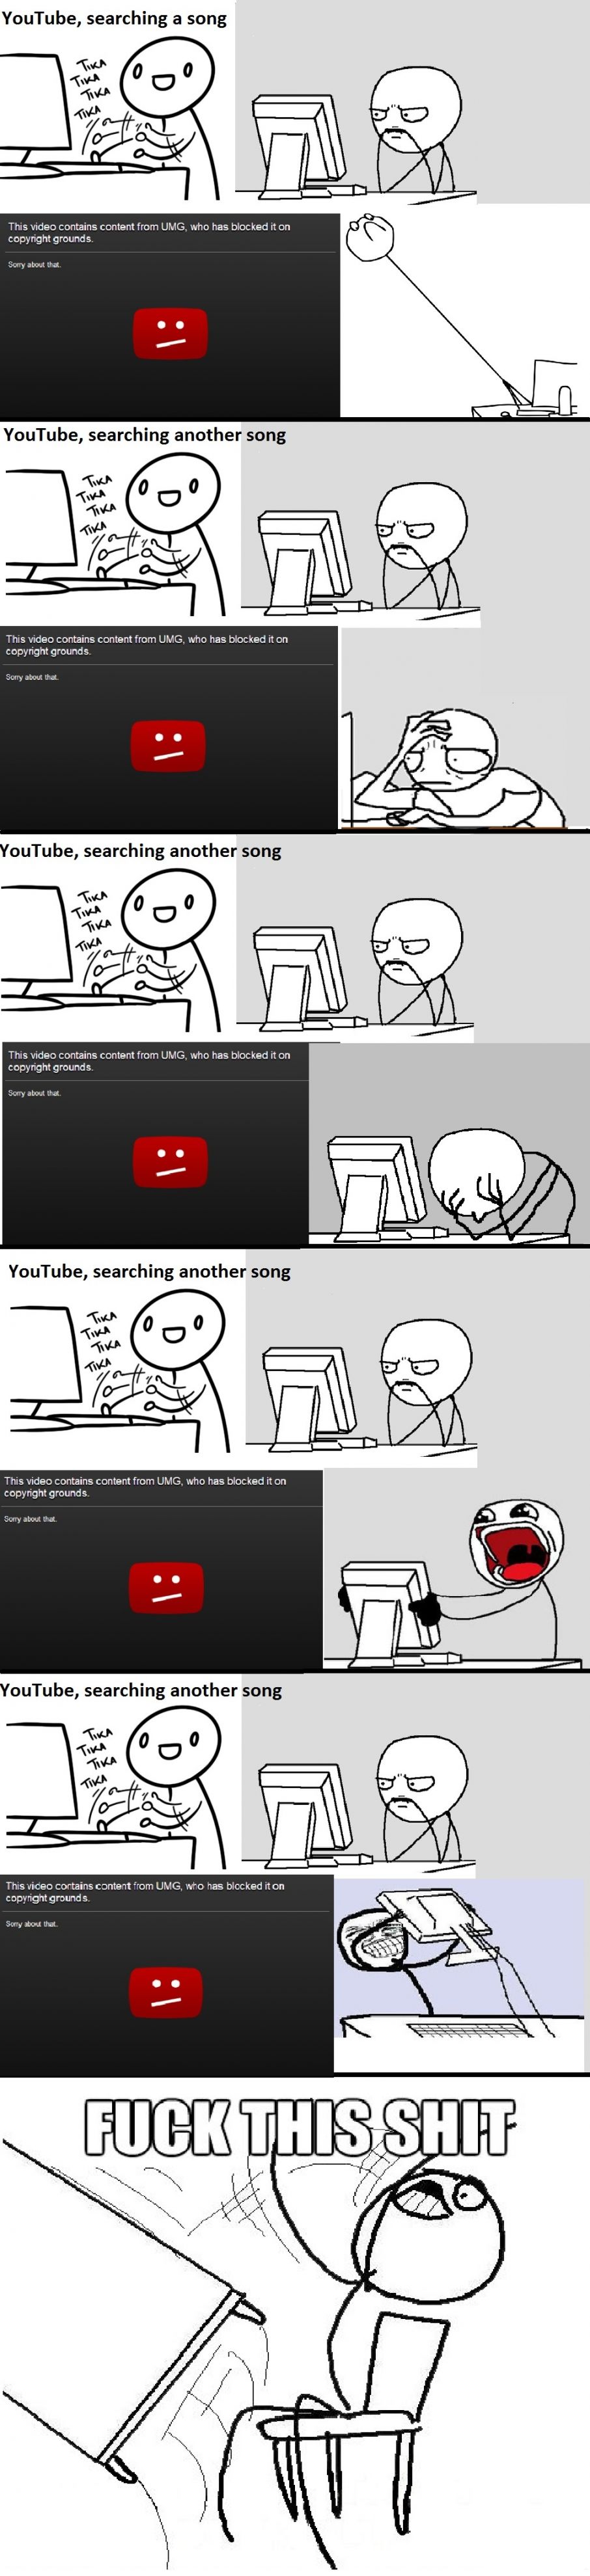 YouTube Music Song Search Meme Blank Meme Template